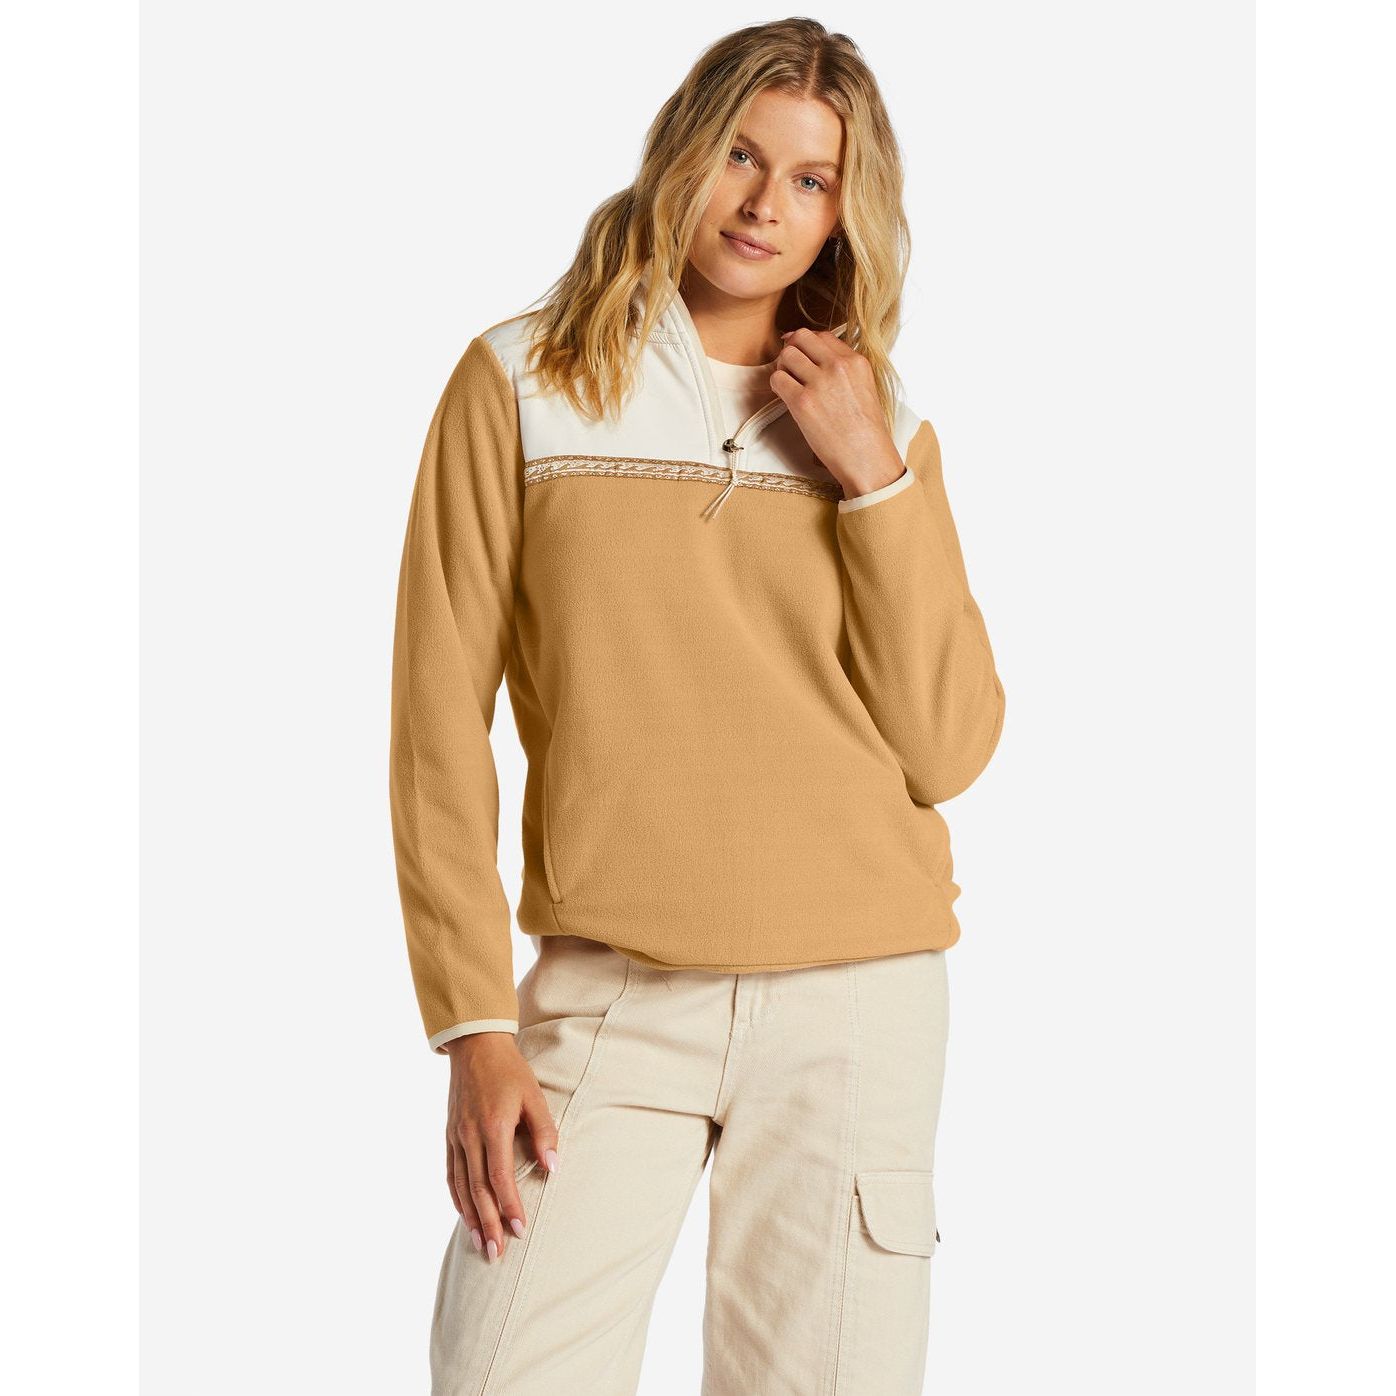 Billabong - Boundary Lite Mock Neck Sweatshirt in Latte-SQ6093825